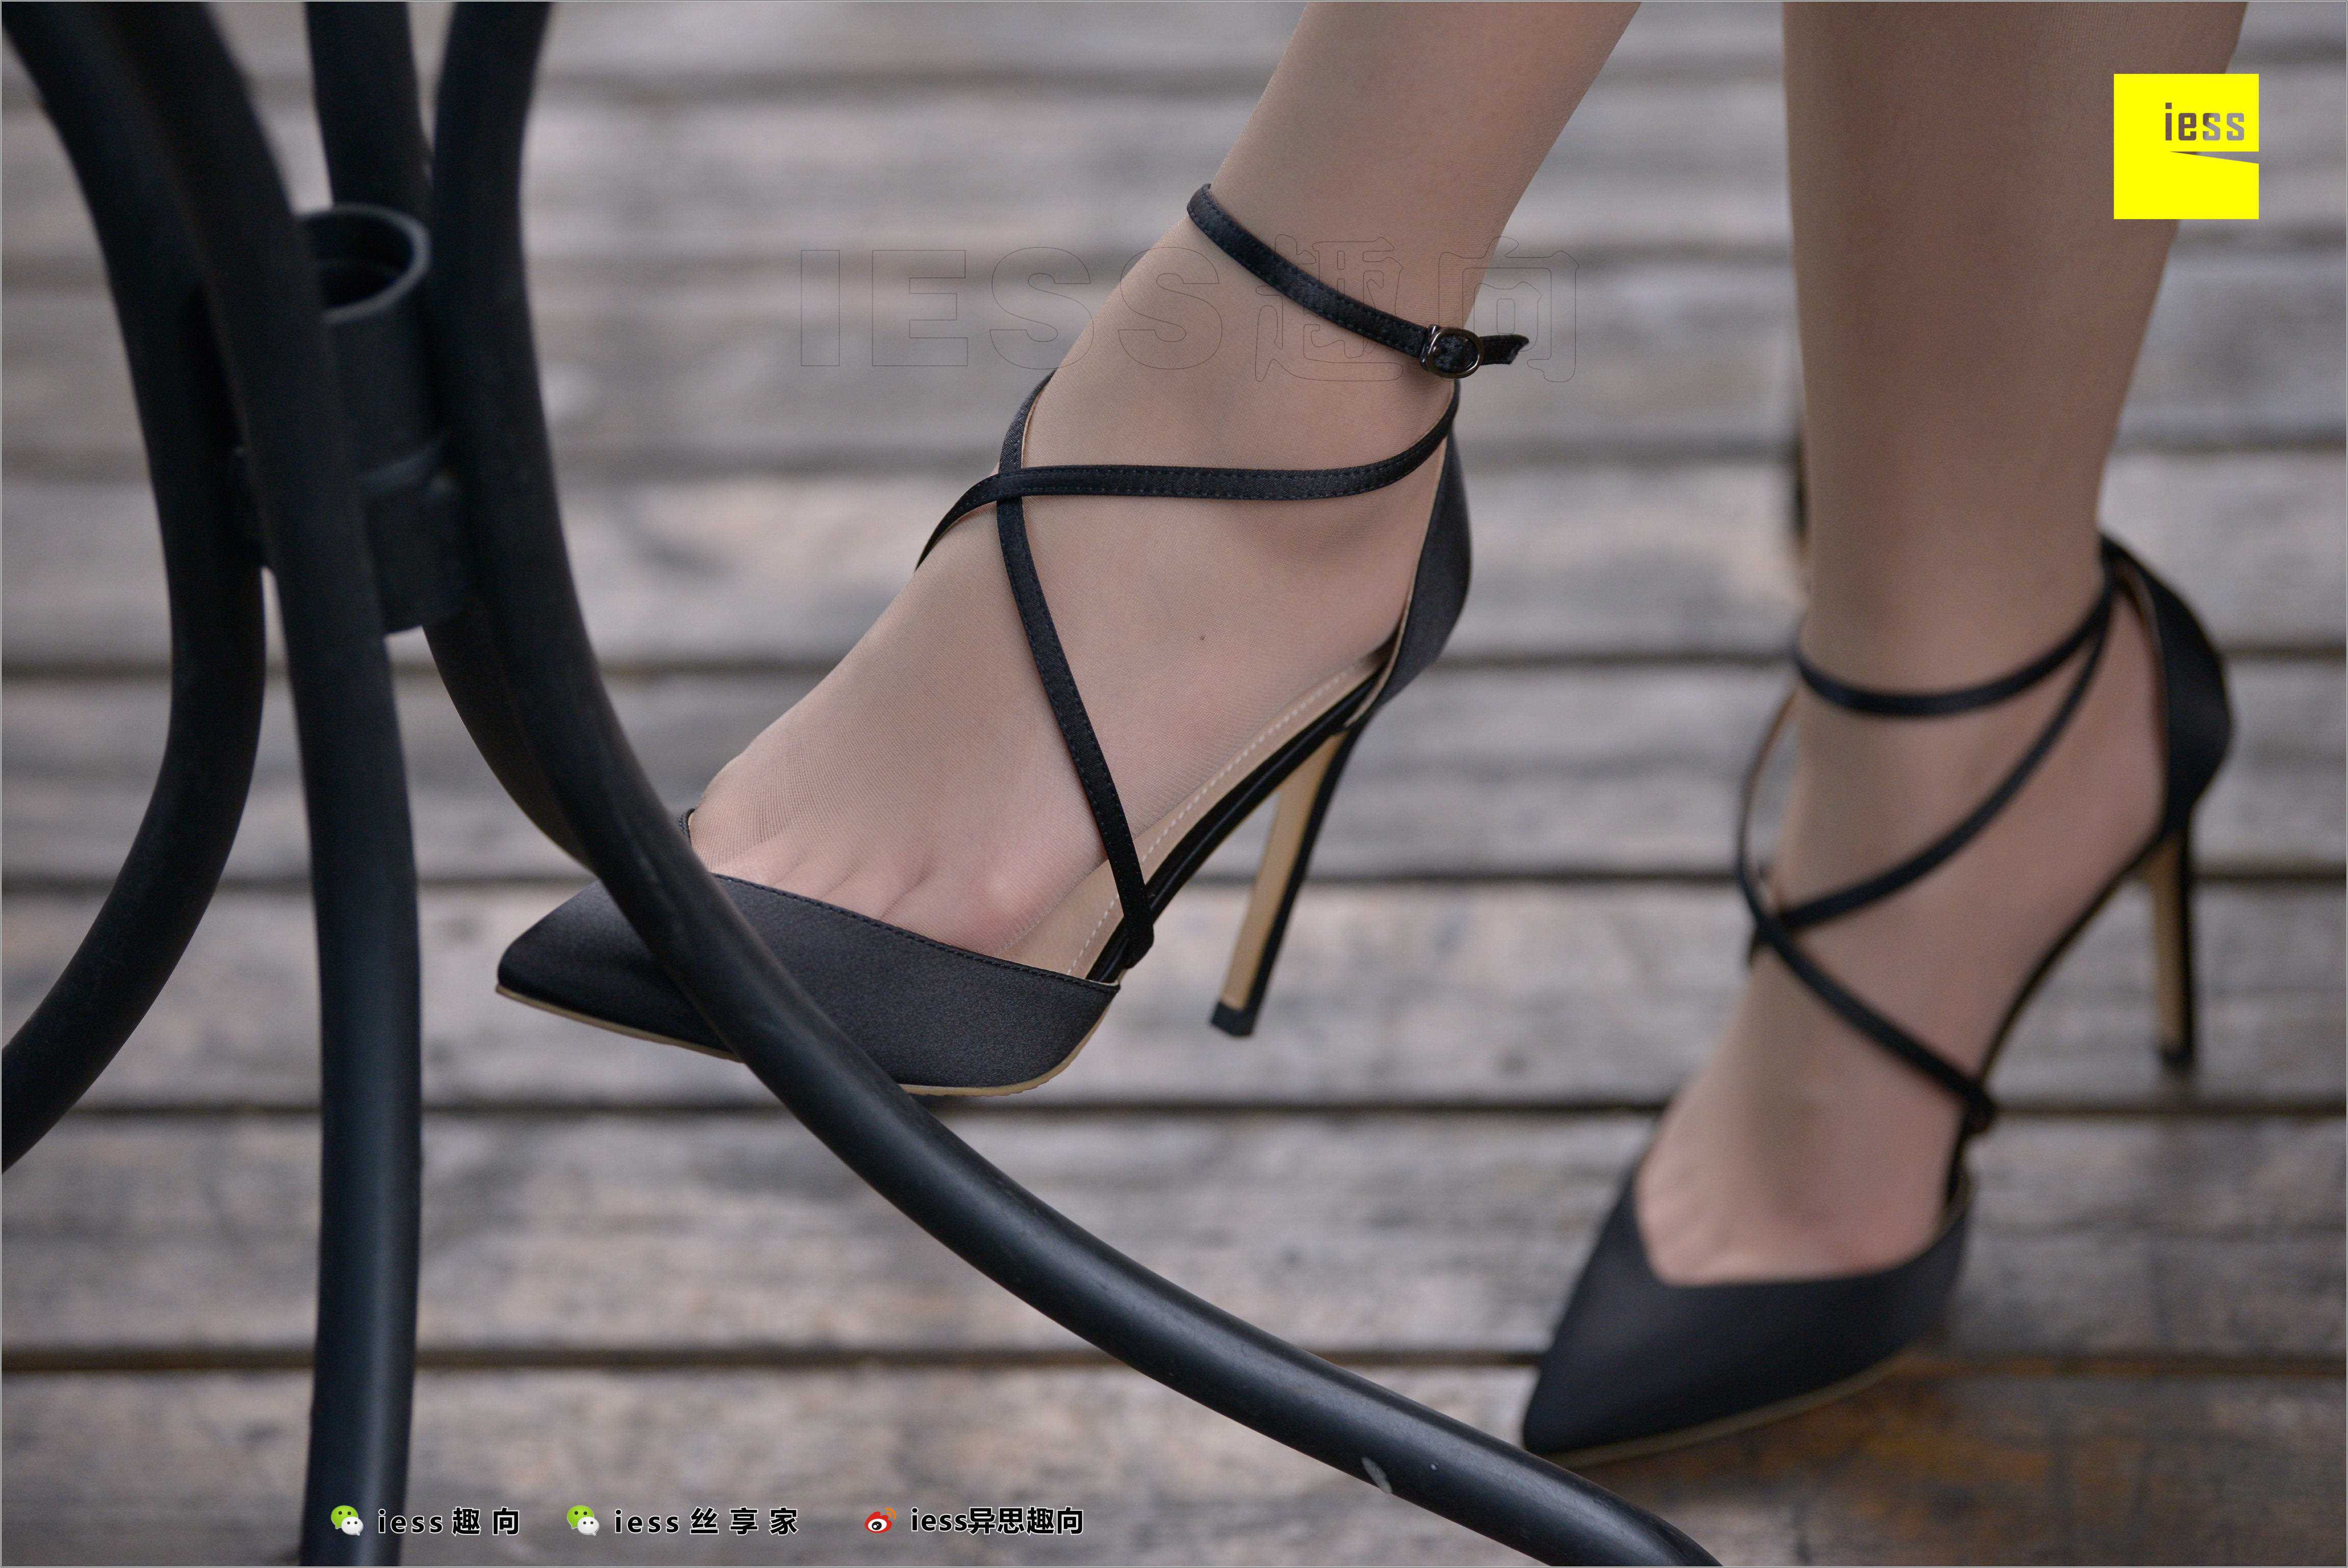 China Beauty Legs and feet 513